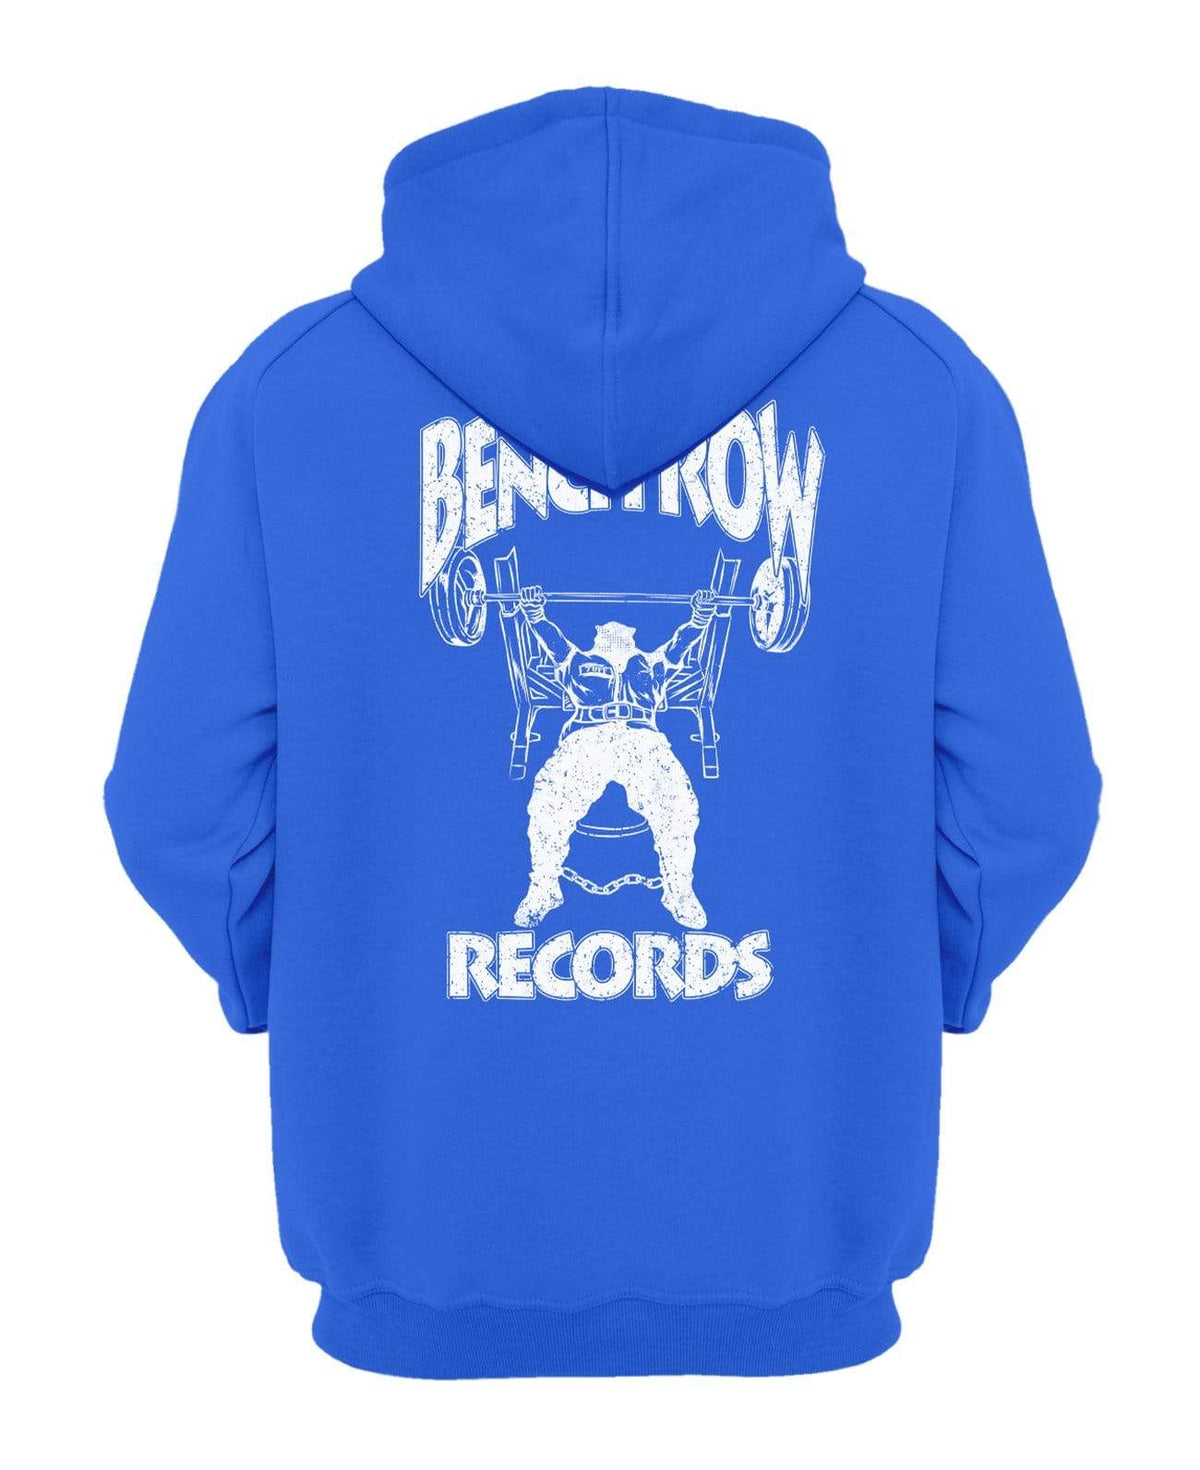 Bench Row Records Hooded Sweatshirt XS / Royal Blue TuffWraps.com